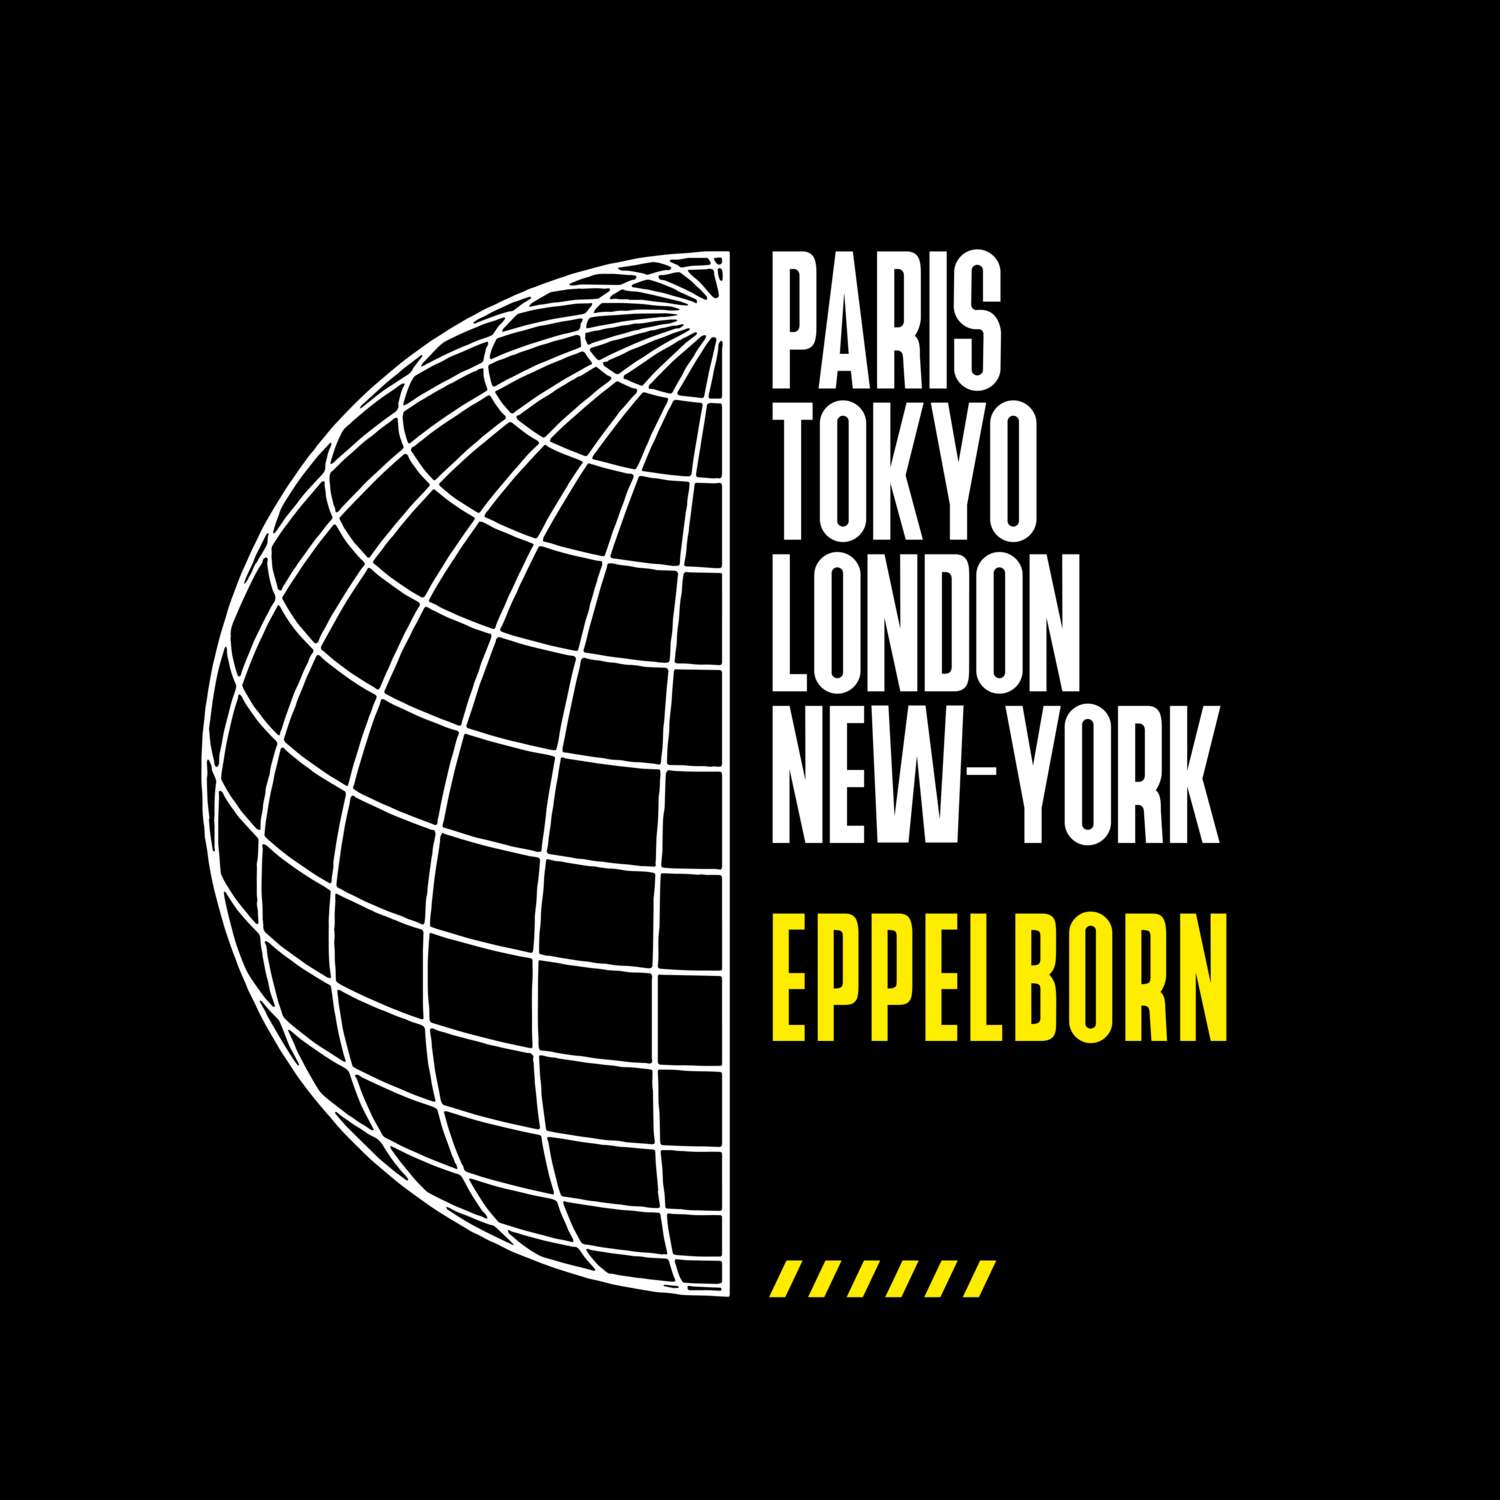 Eppelborn T-Shirt »Paris Tokyo London«